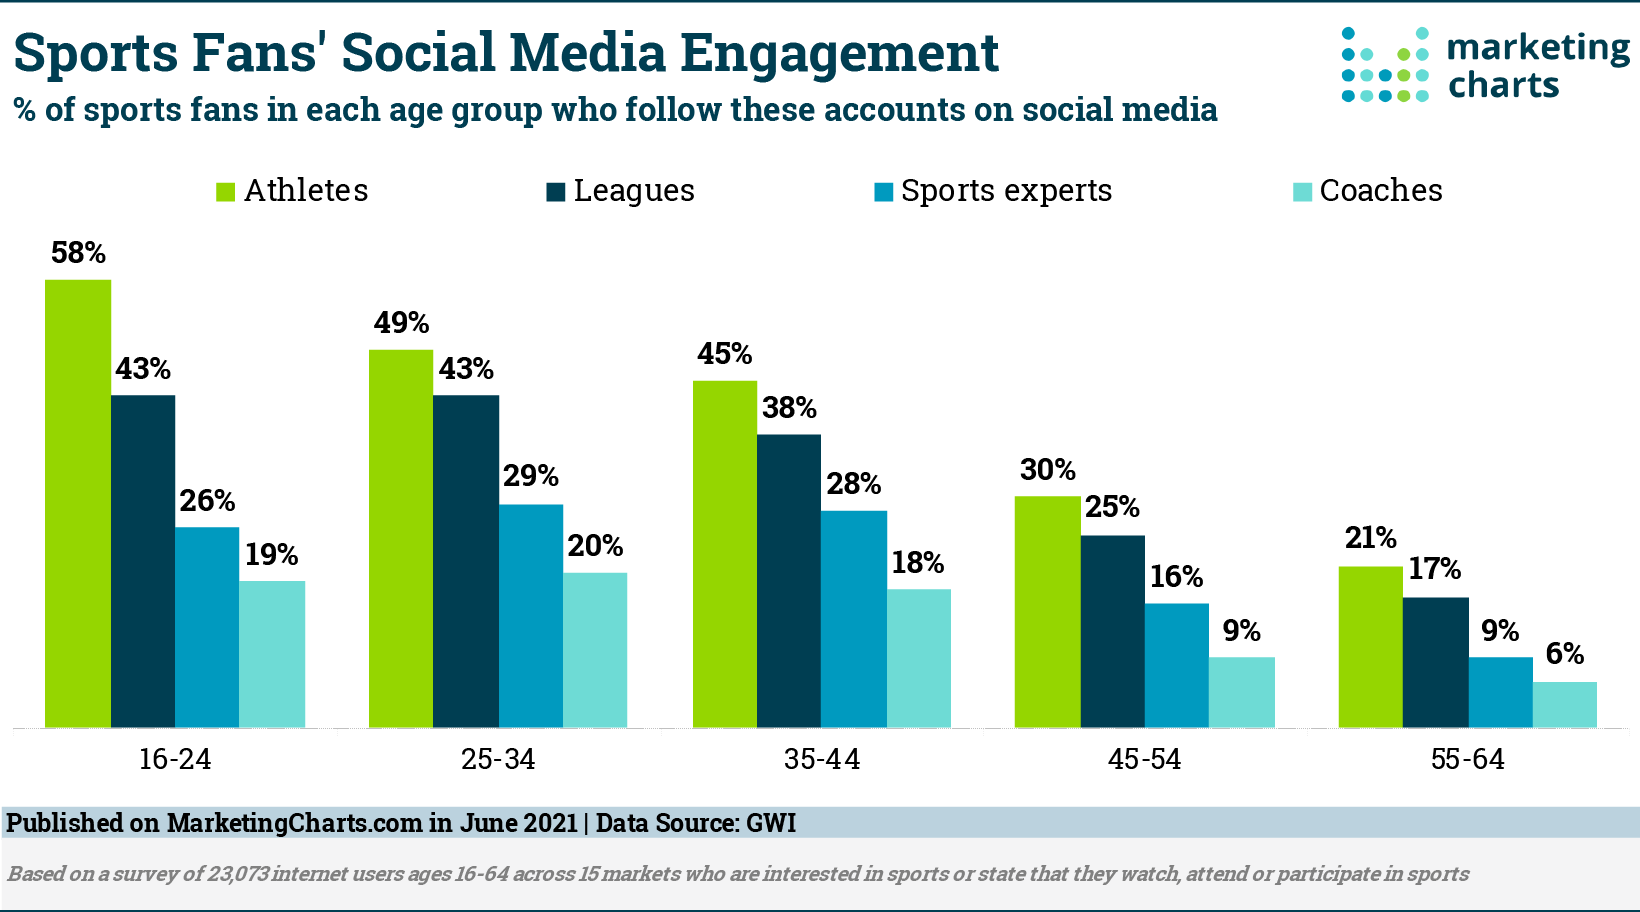 Sports Fans Display Strong Social Engagement - Marketing Charts